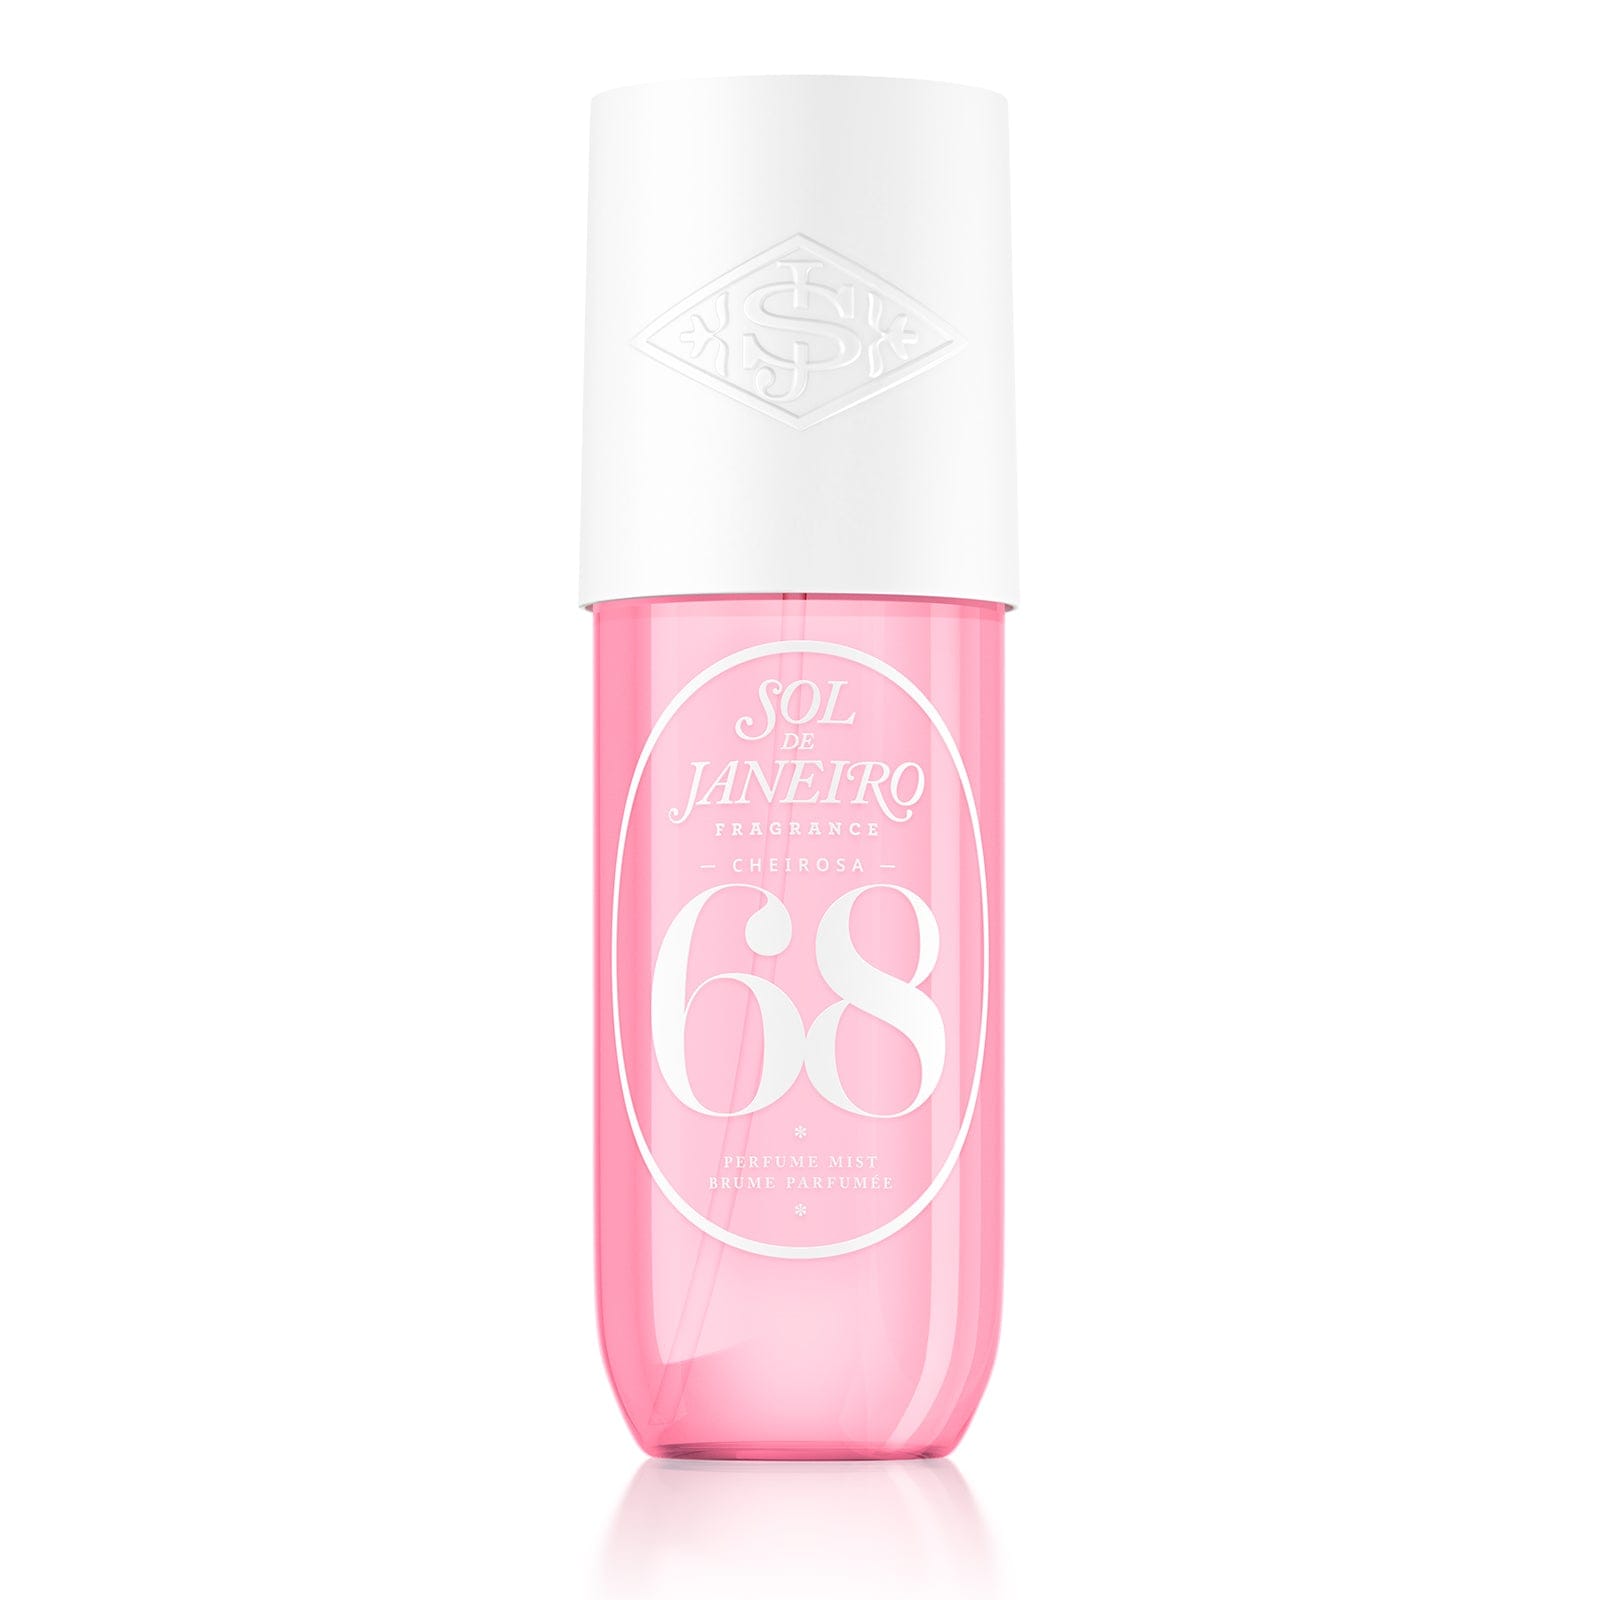 Cheirosa 68 Perfume Mist 240ml